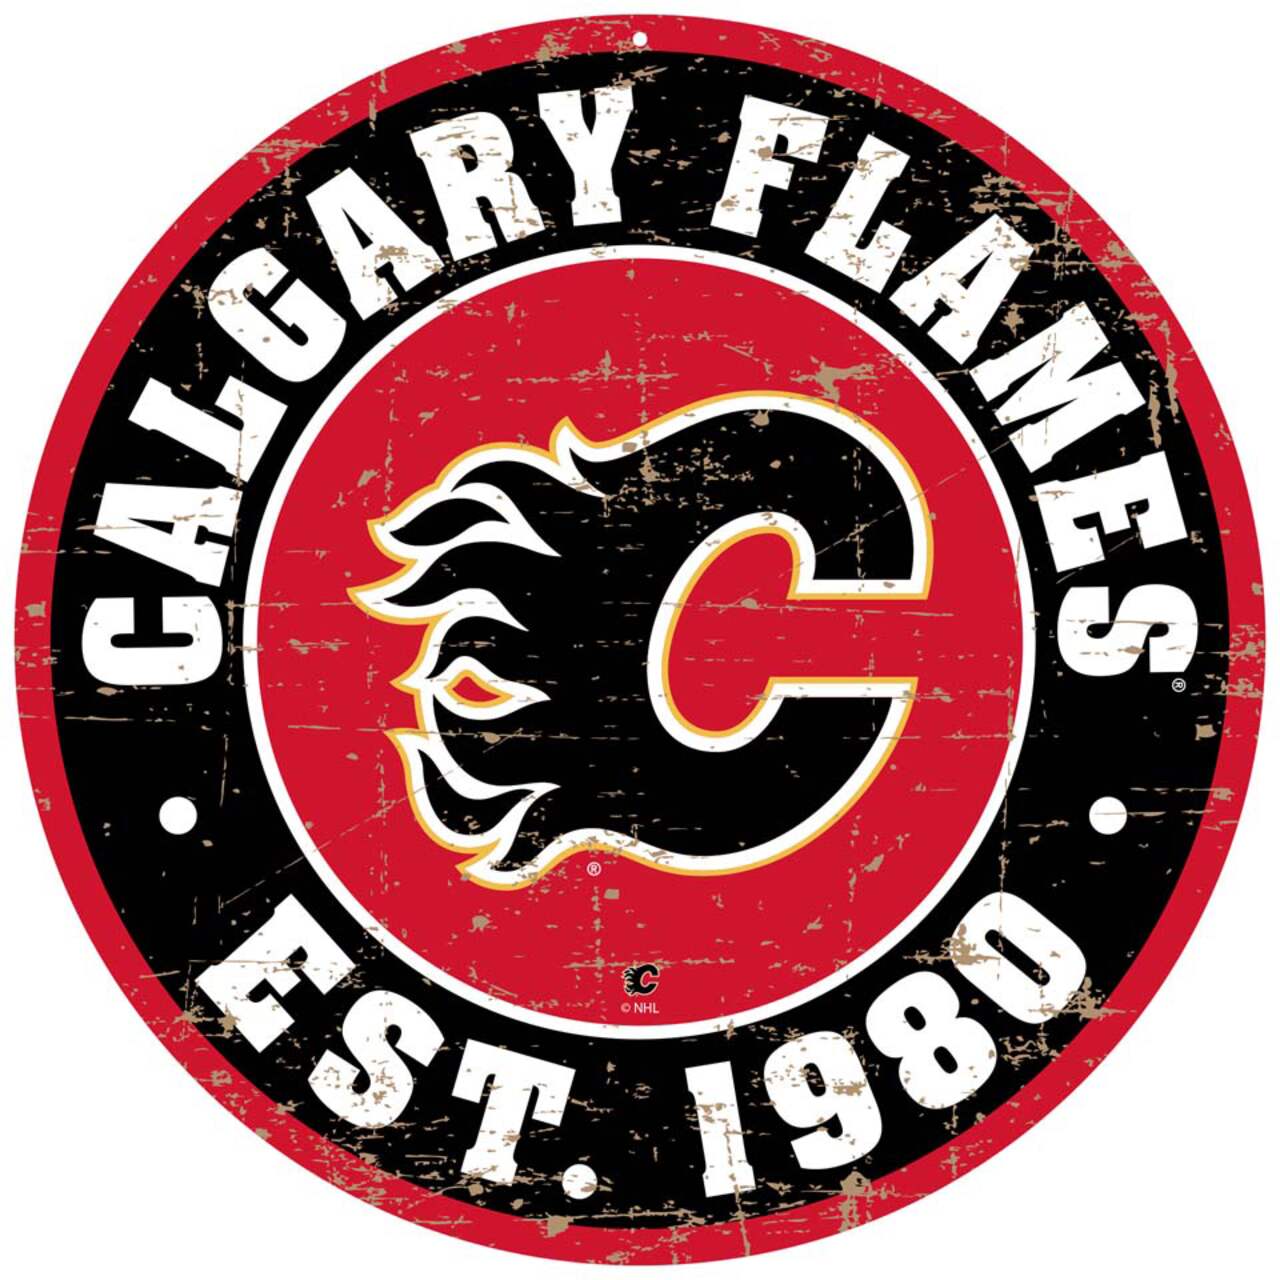 NHL Calgary Flames Hockey Team Logo Allover Print Pyjama Pants